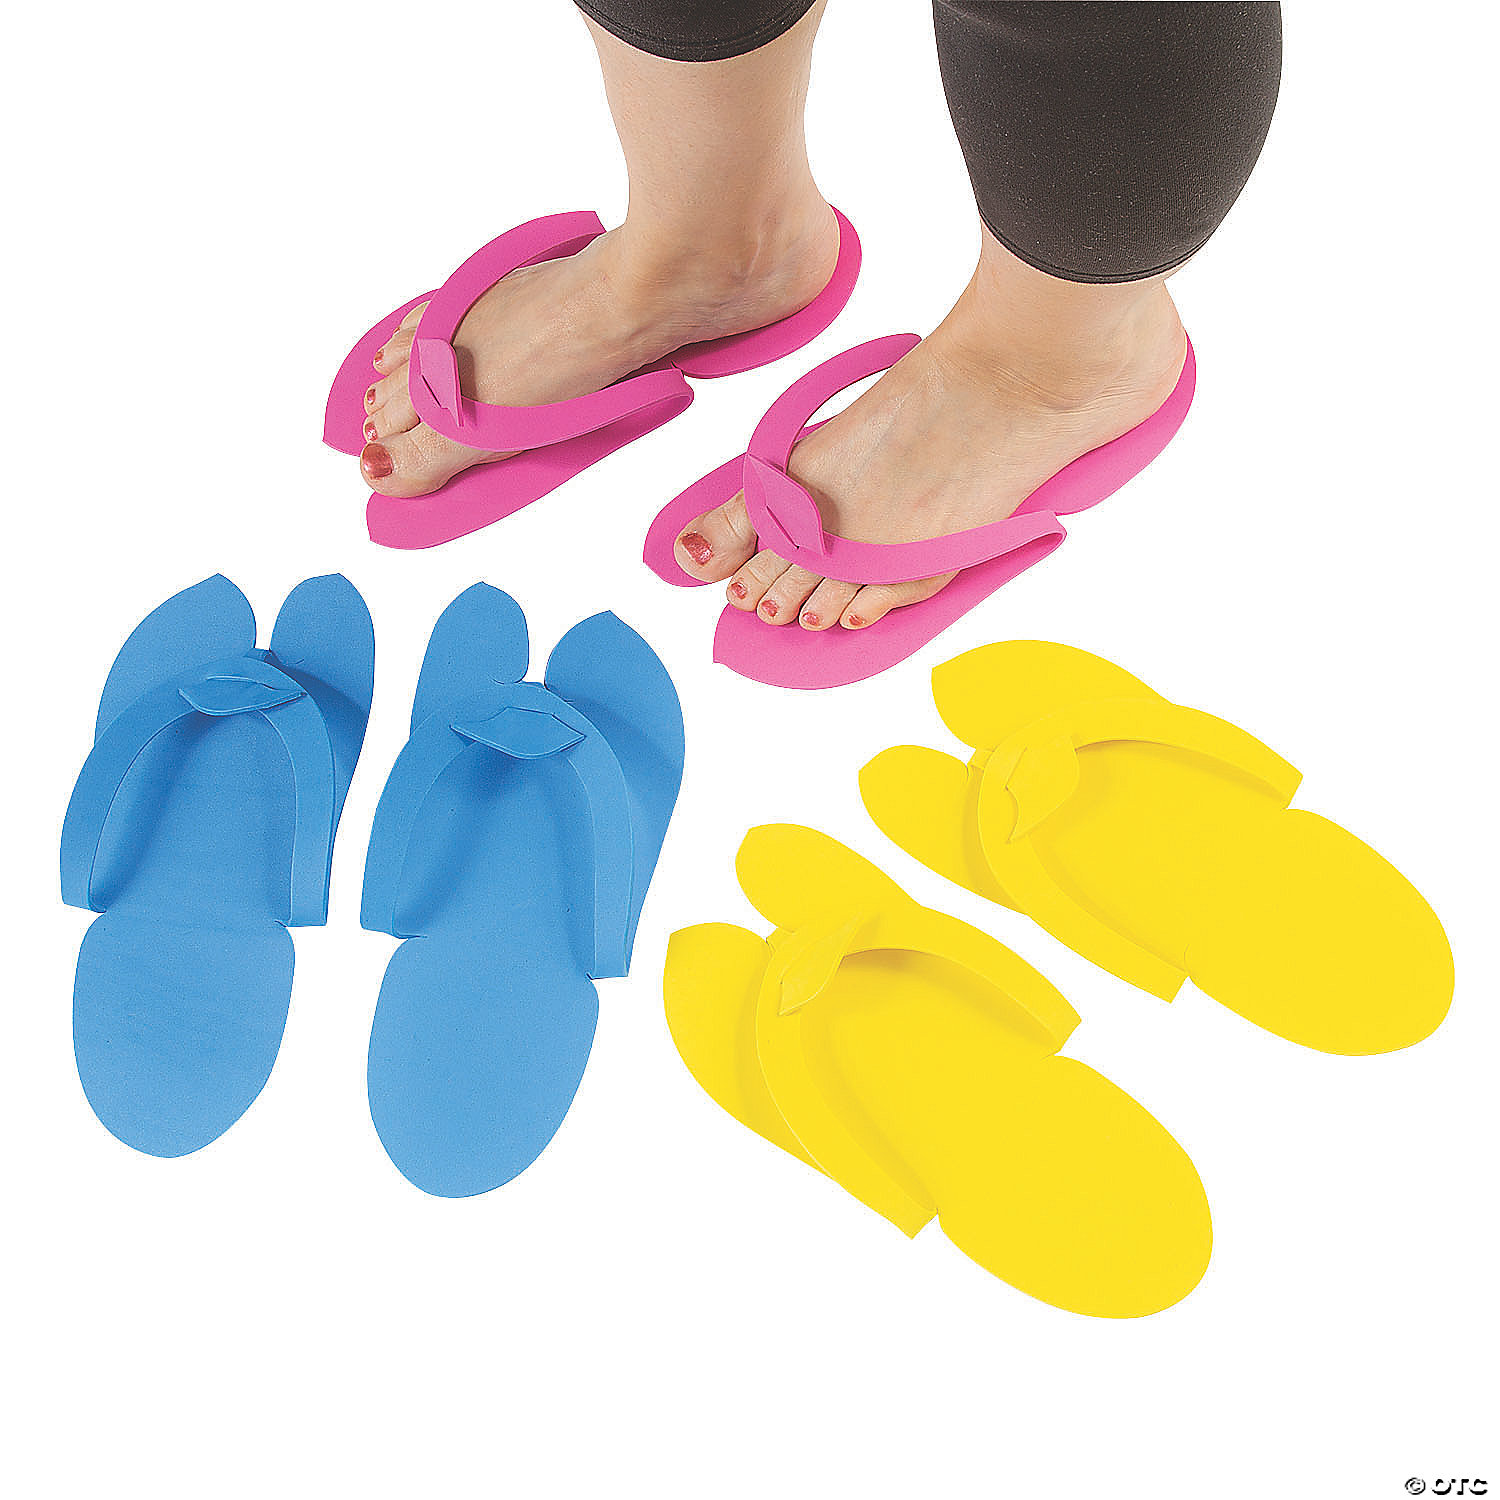 pedicure flip flops